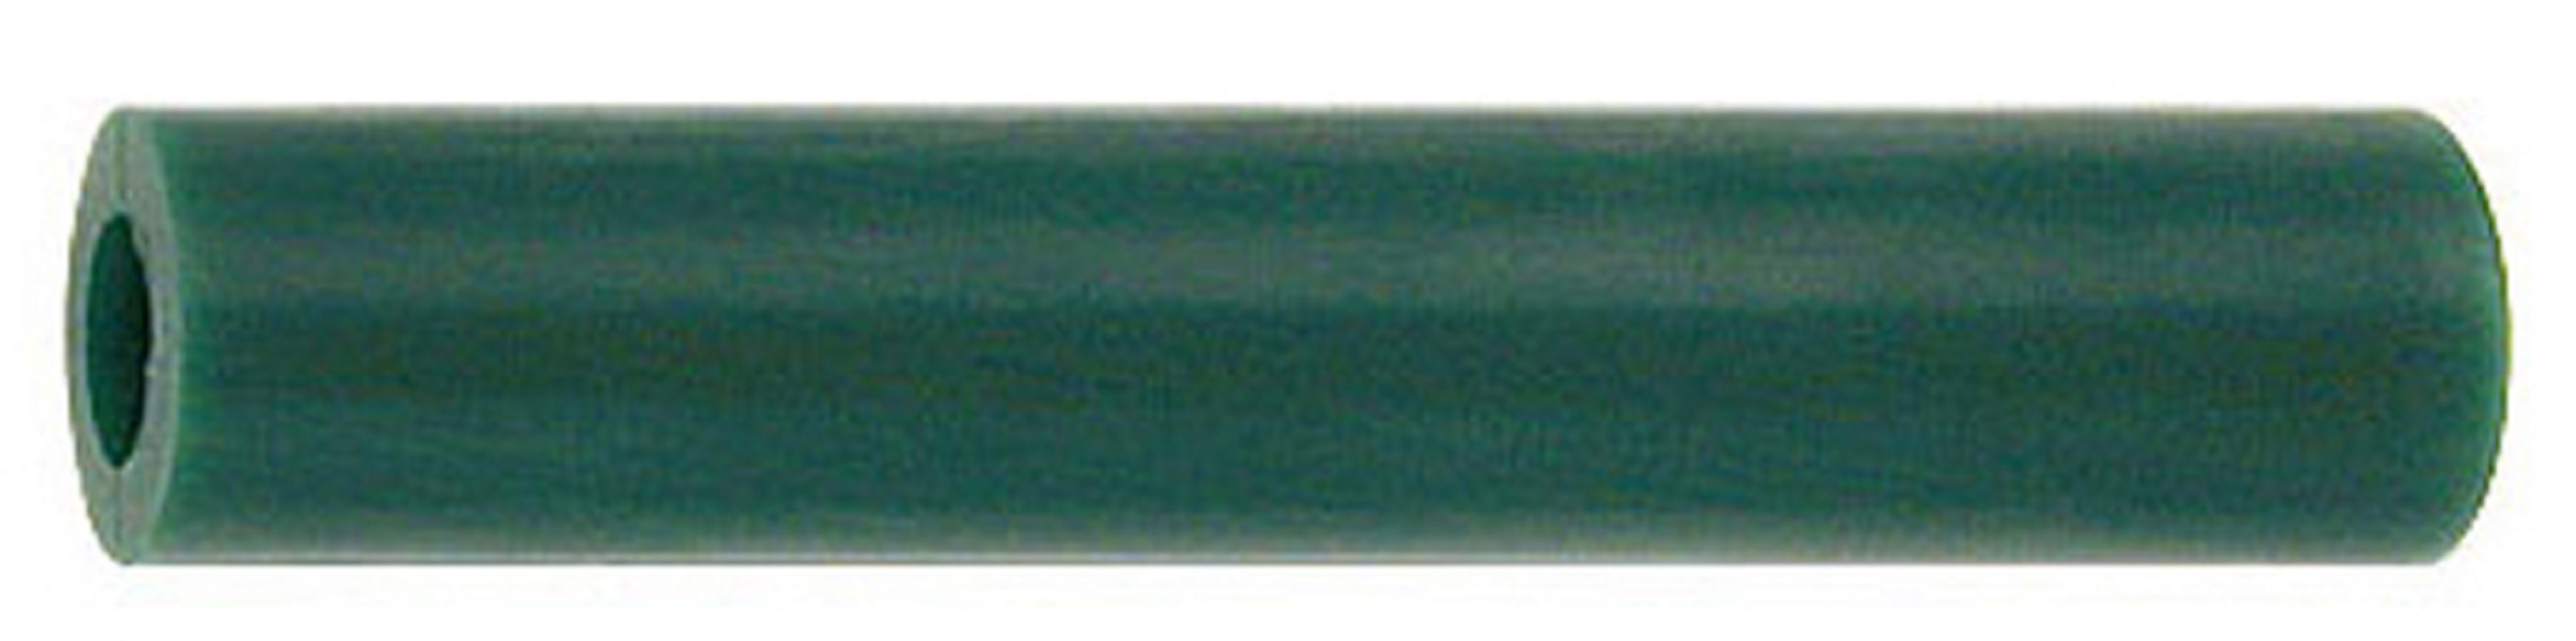 FERRIS FILE-A-WAX TUBE CENTER HOLE GREEN 7/8\"x5/8\" 22mm x15mm, t875